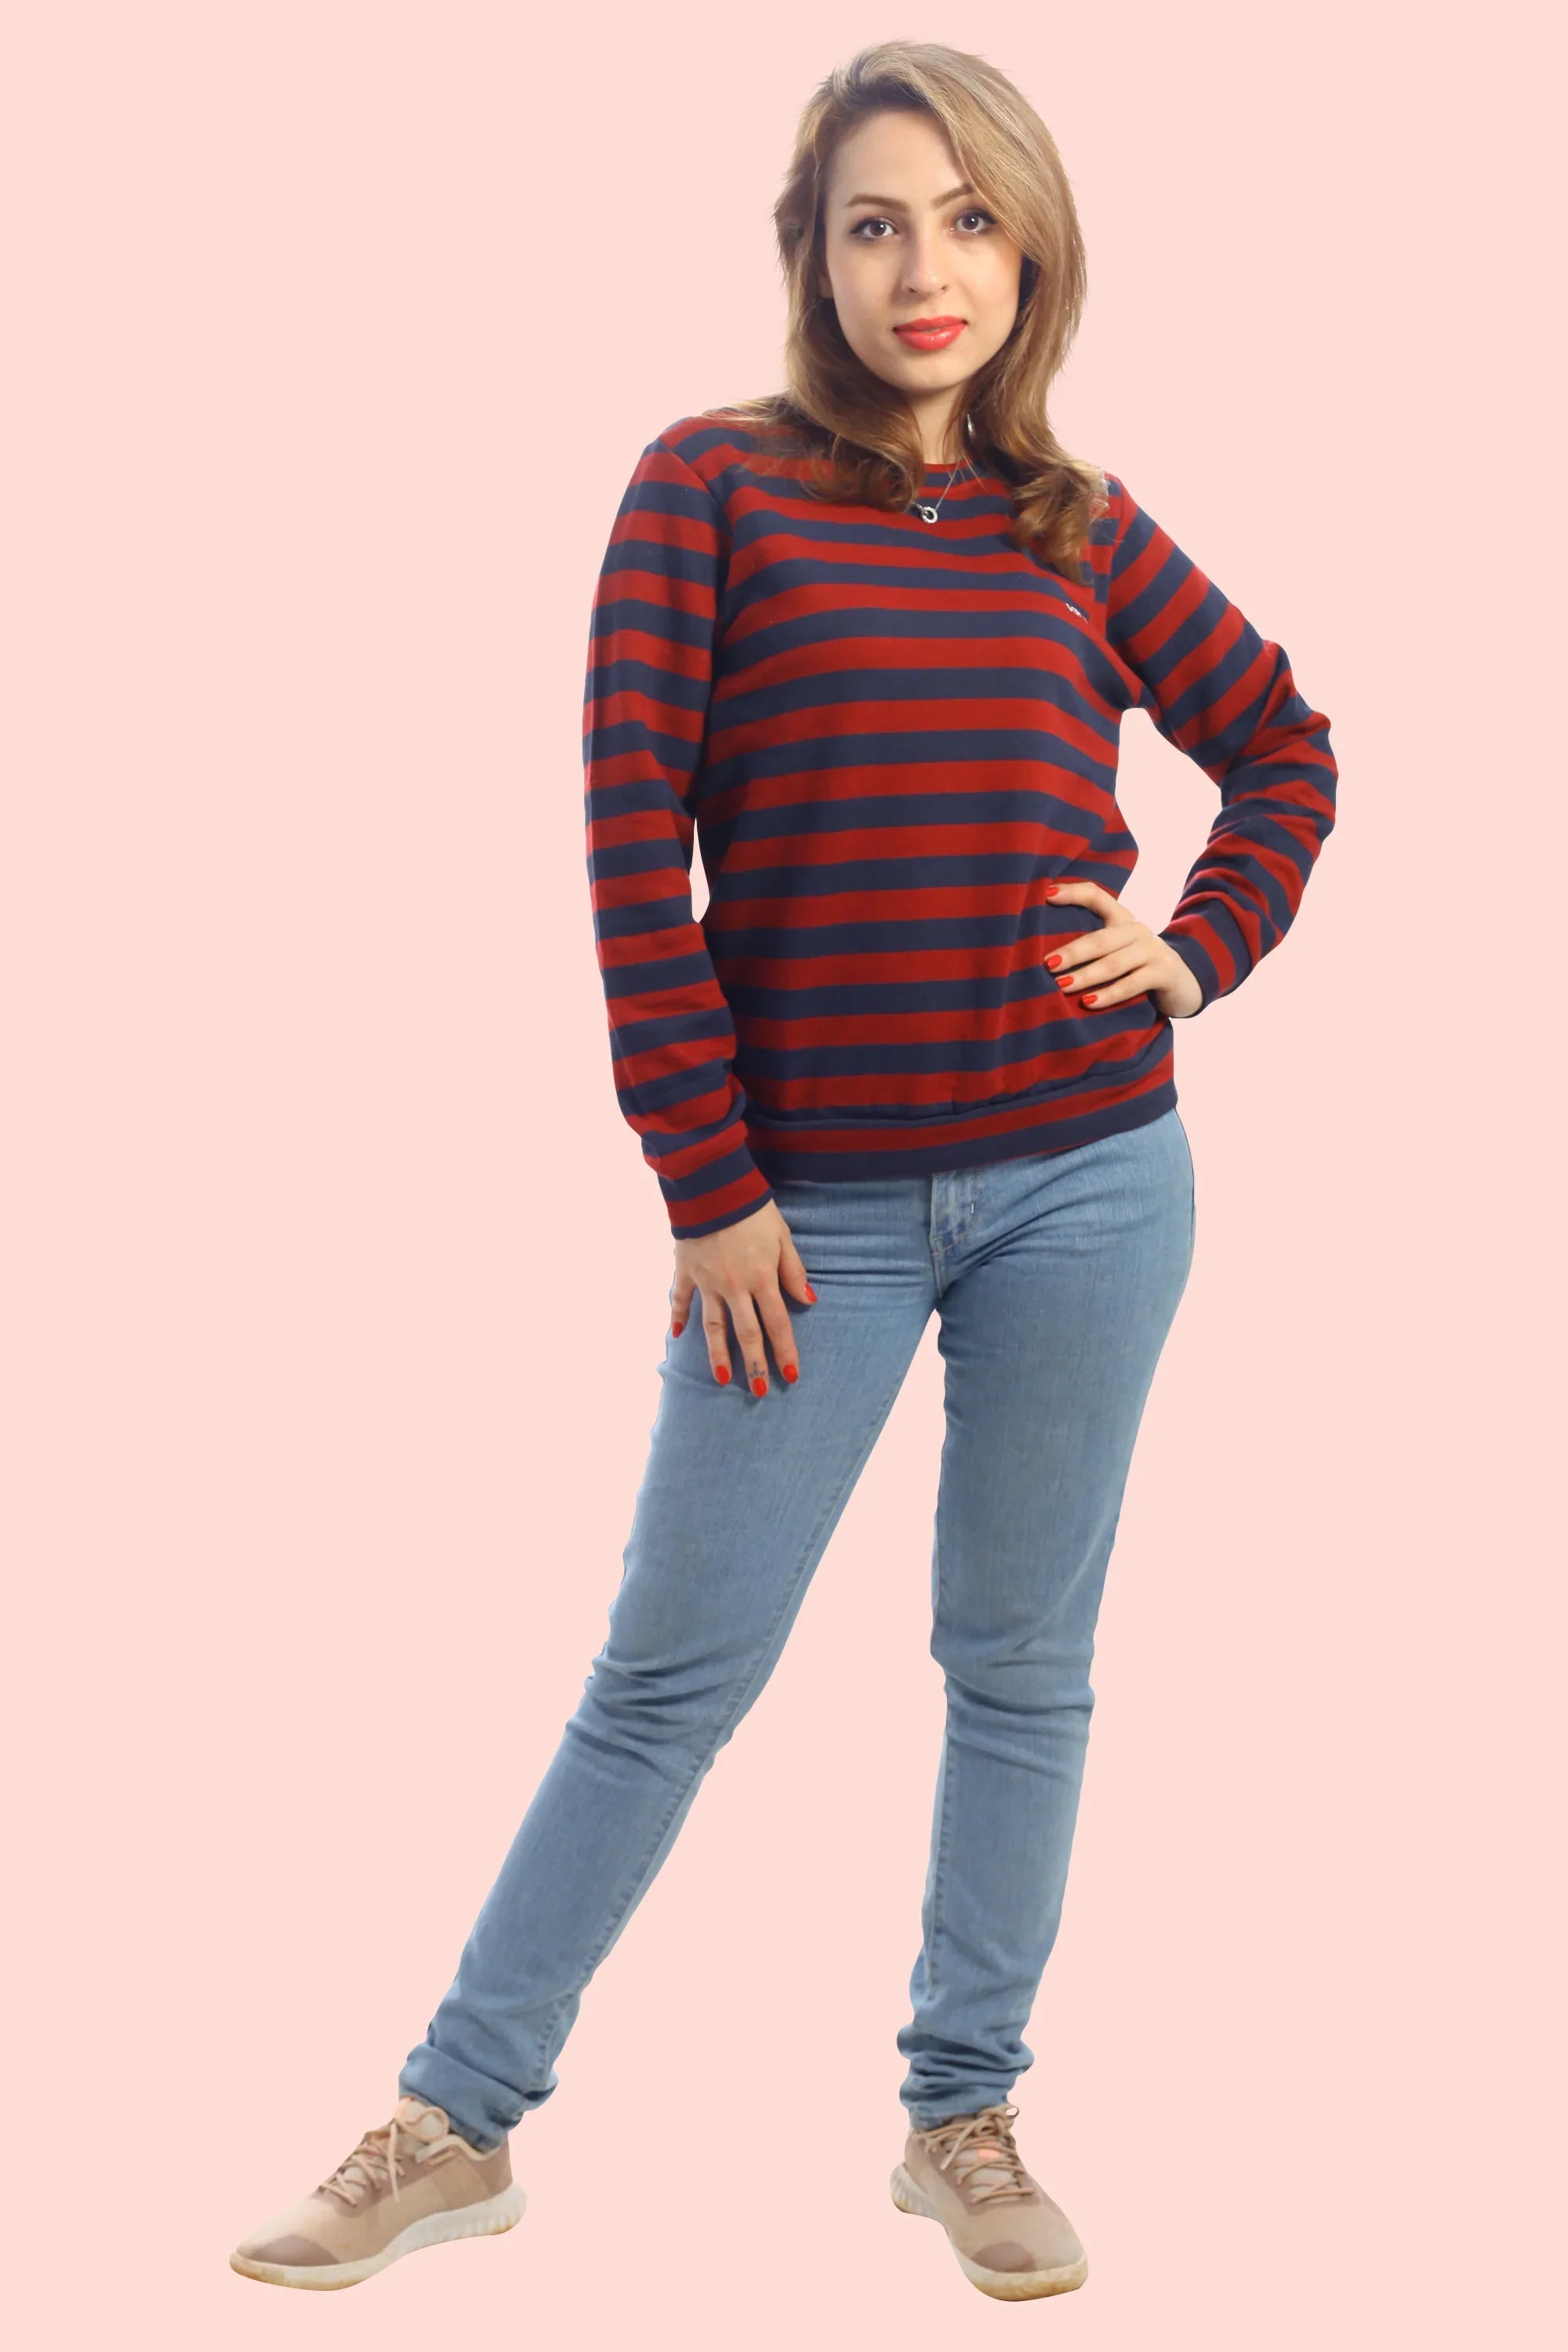 RUE NOEL - Cherry Red/Navy Stripes Sweatshirt (UNISEX) - saey7